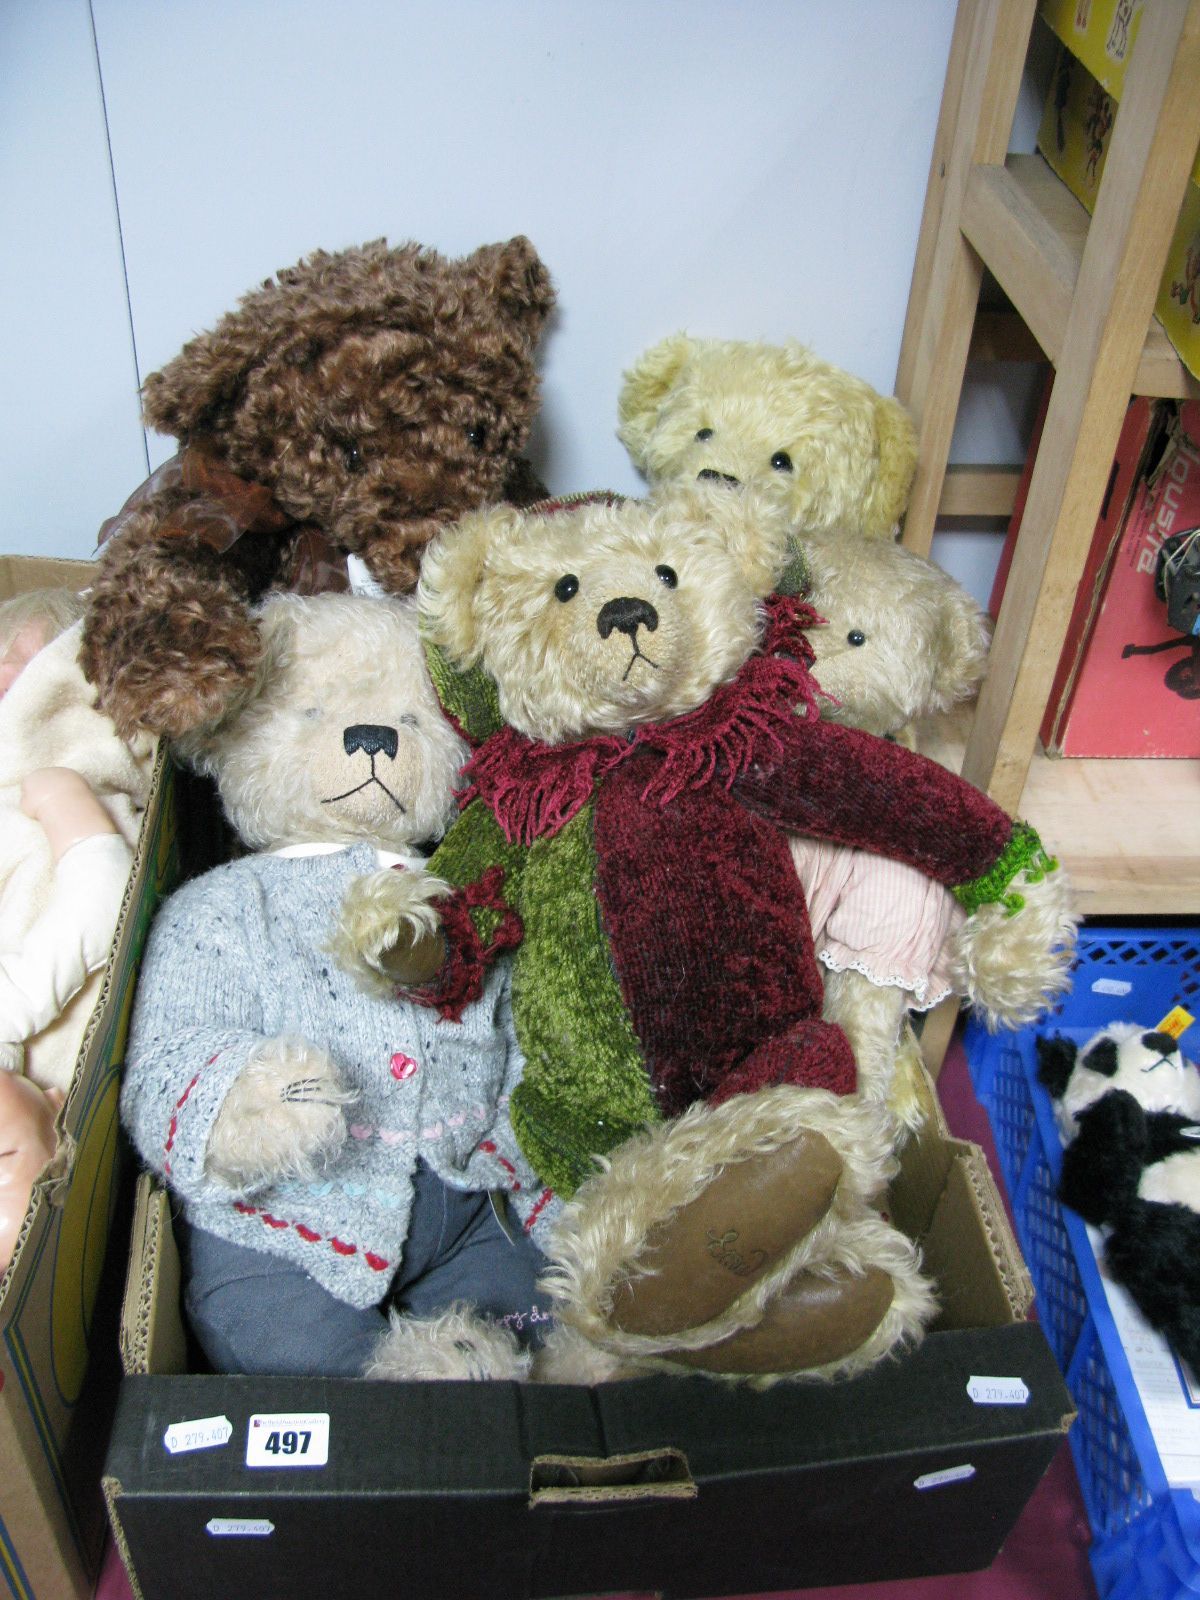 Five Collectors Teddy Bears, "Jasper" by Gund, "Daisy" by Fair Bears - Diana Taylor, "Tabatha" by